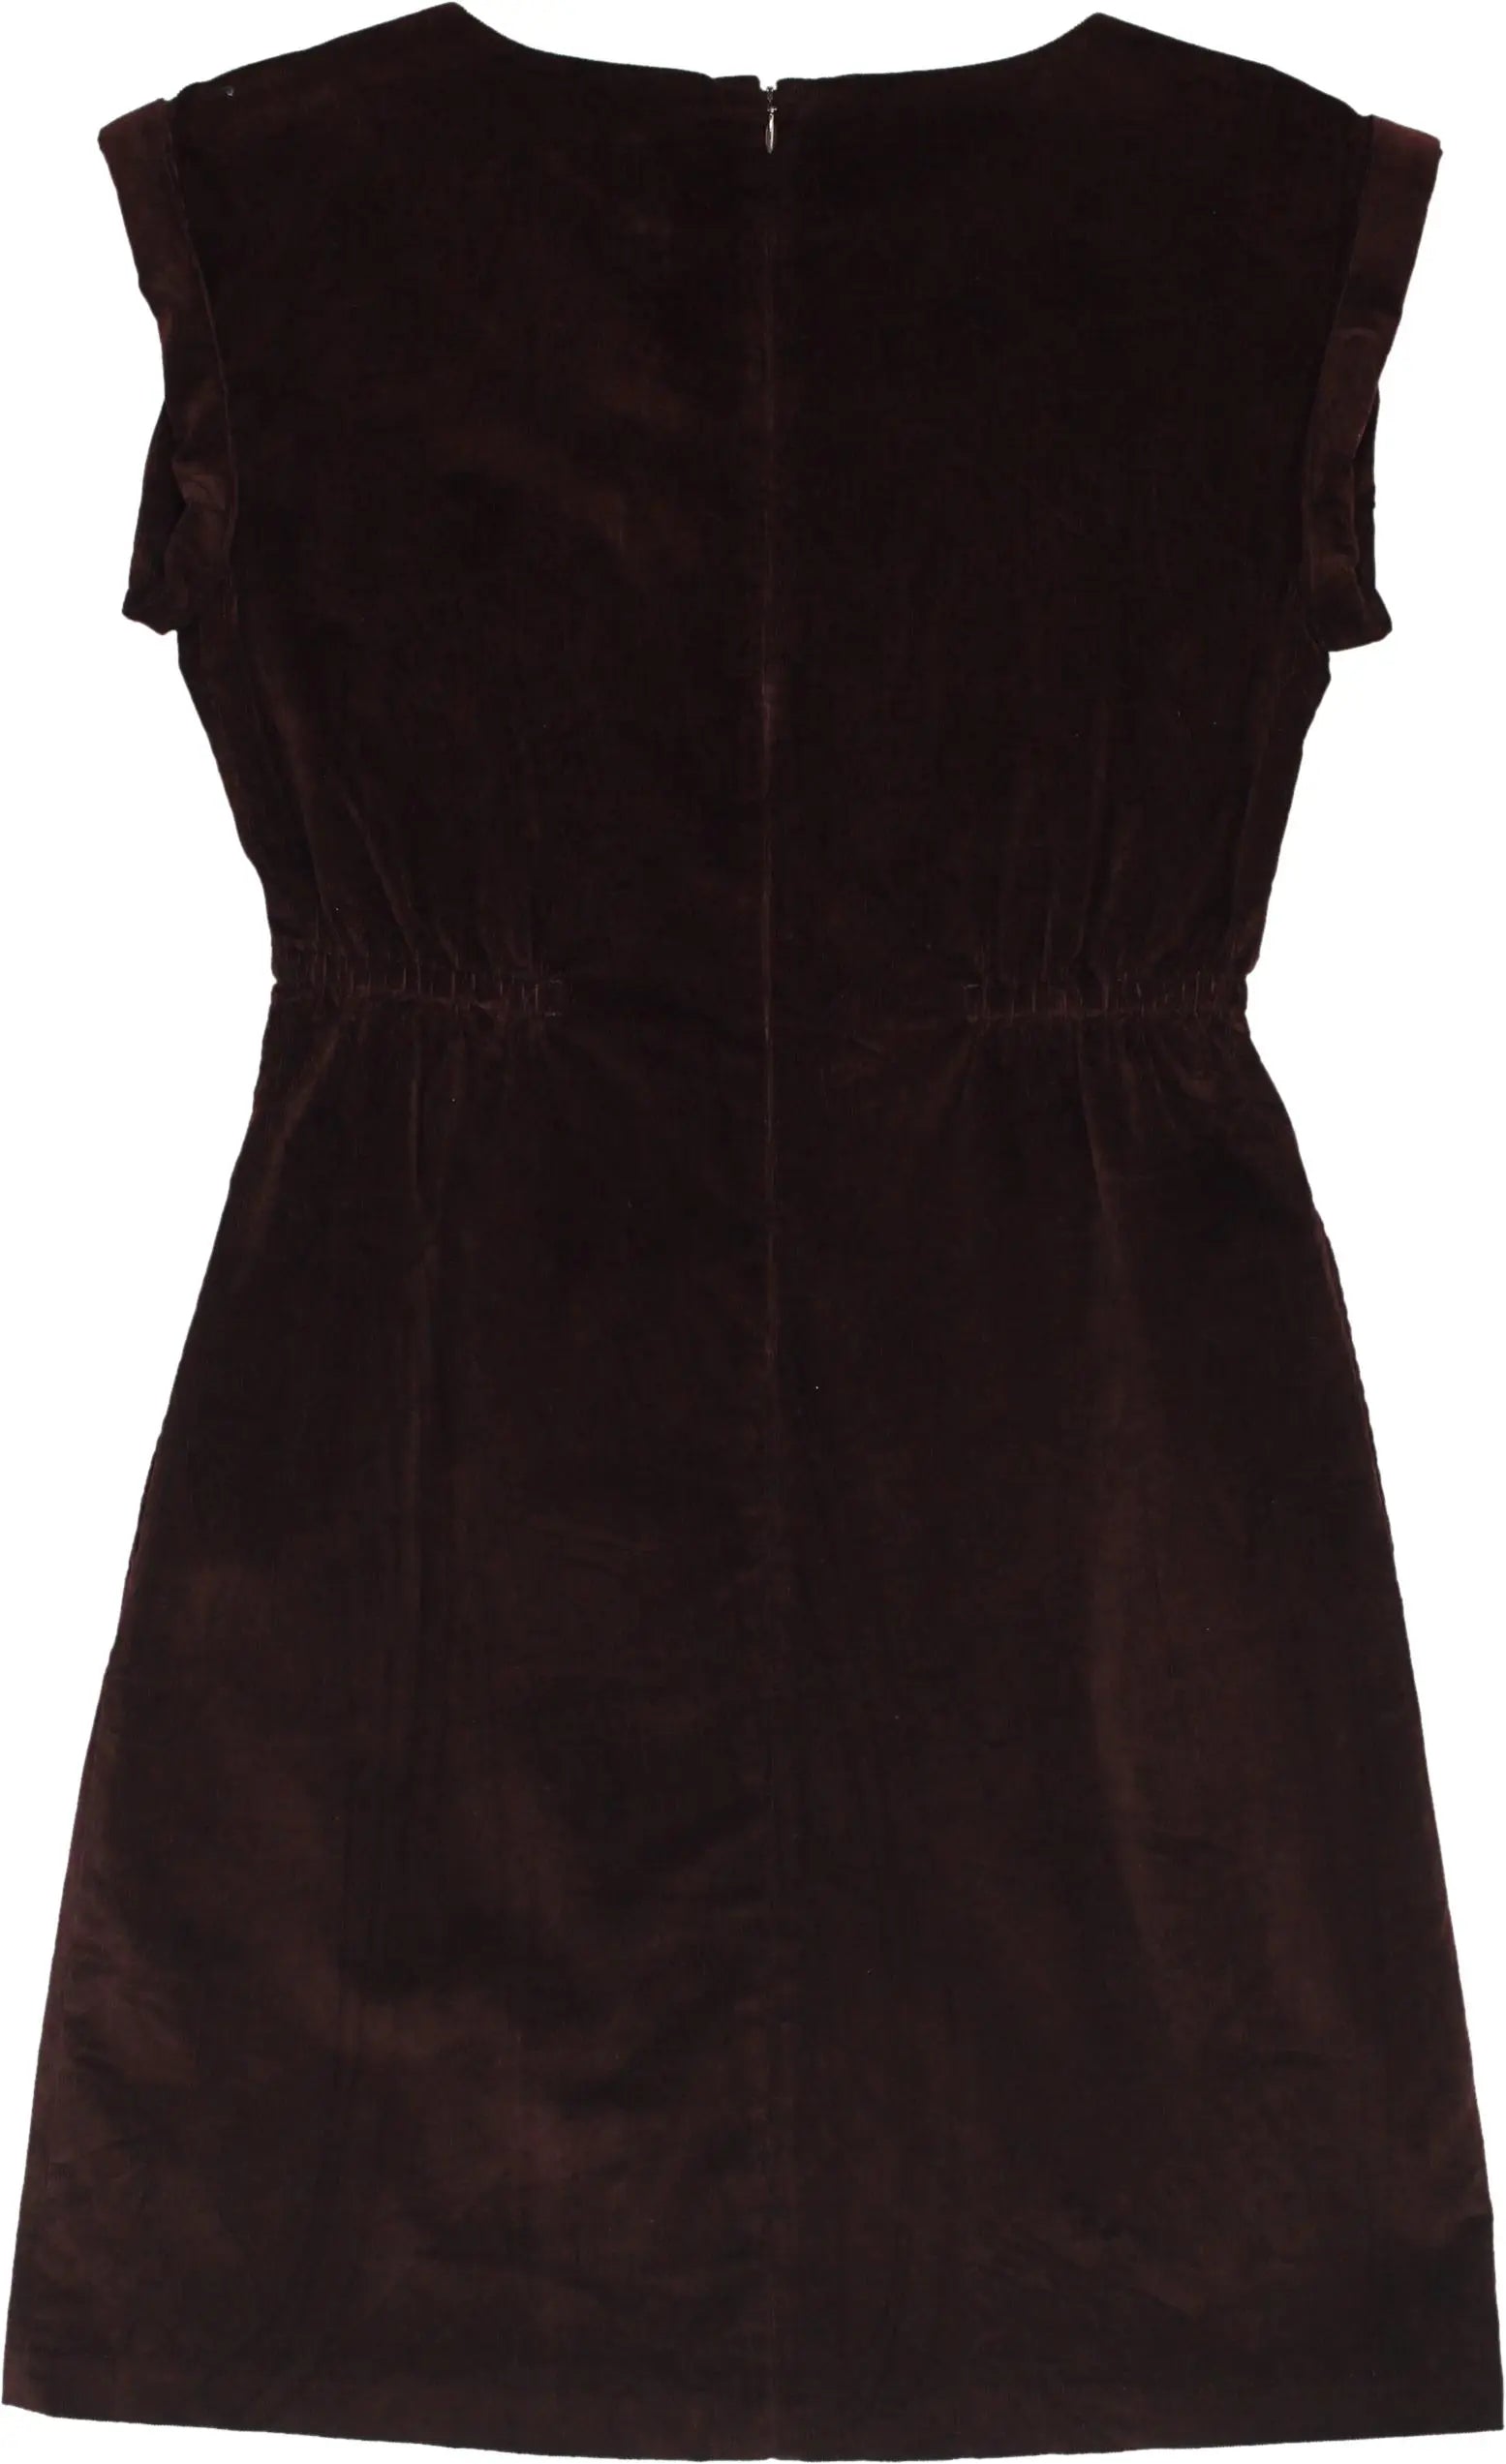 Lands' End - Corduroy Dress- ThriftTale.com - Vintage and second handclothing